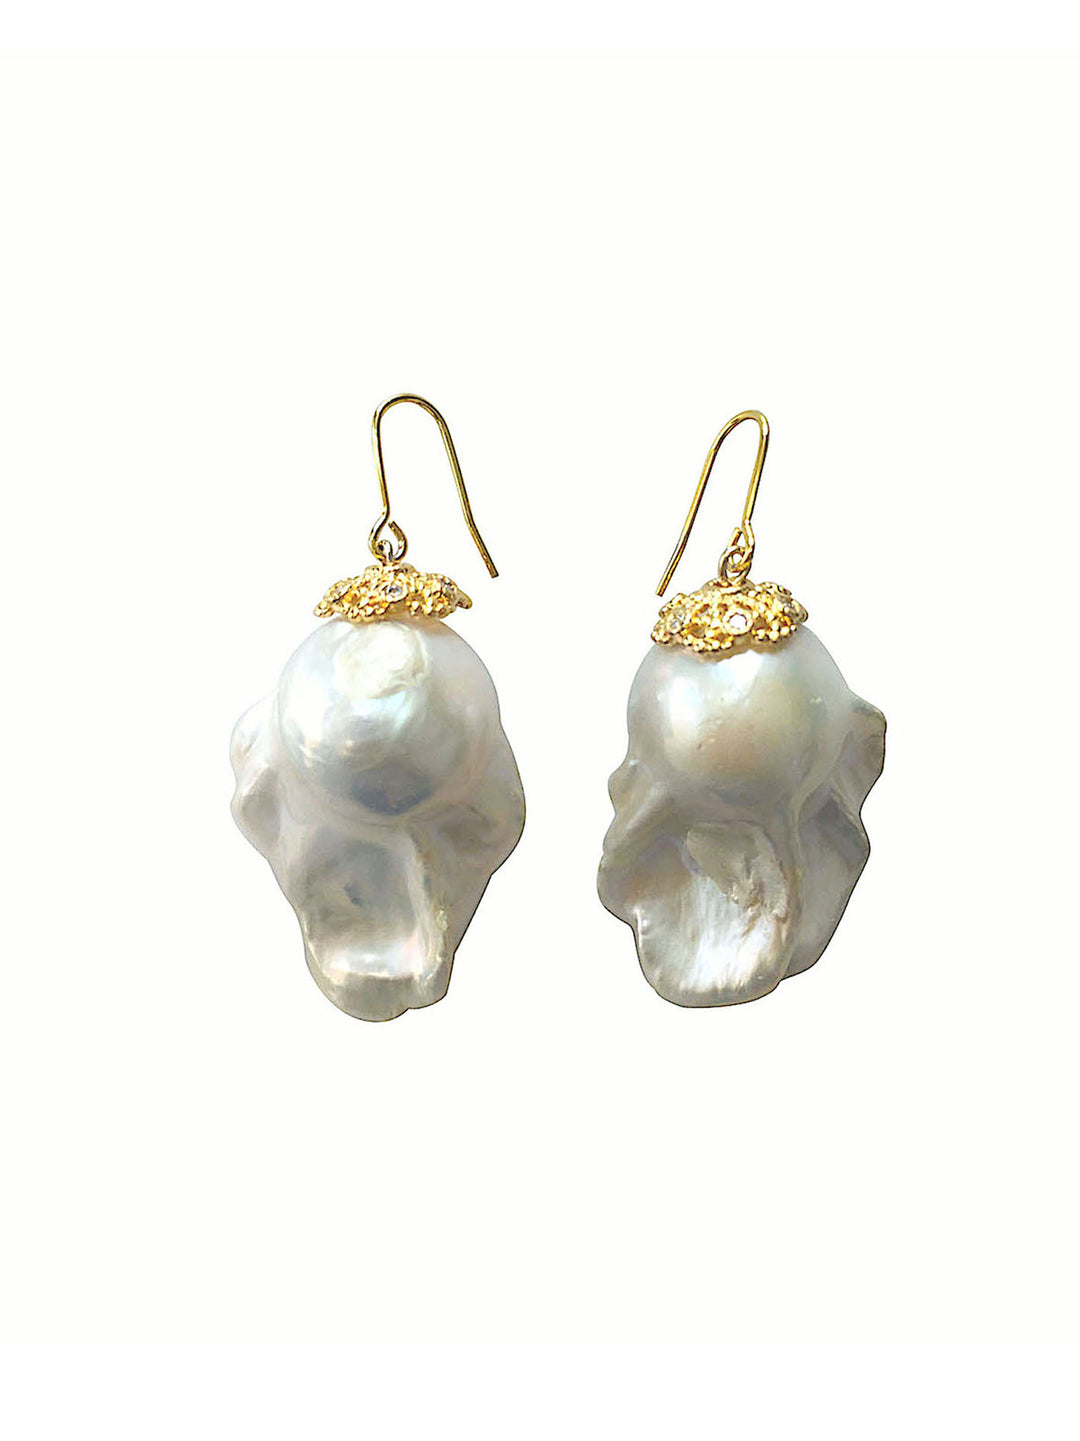 Nugget white baroque freshwater pearls earrings NPE005 - FARRA